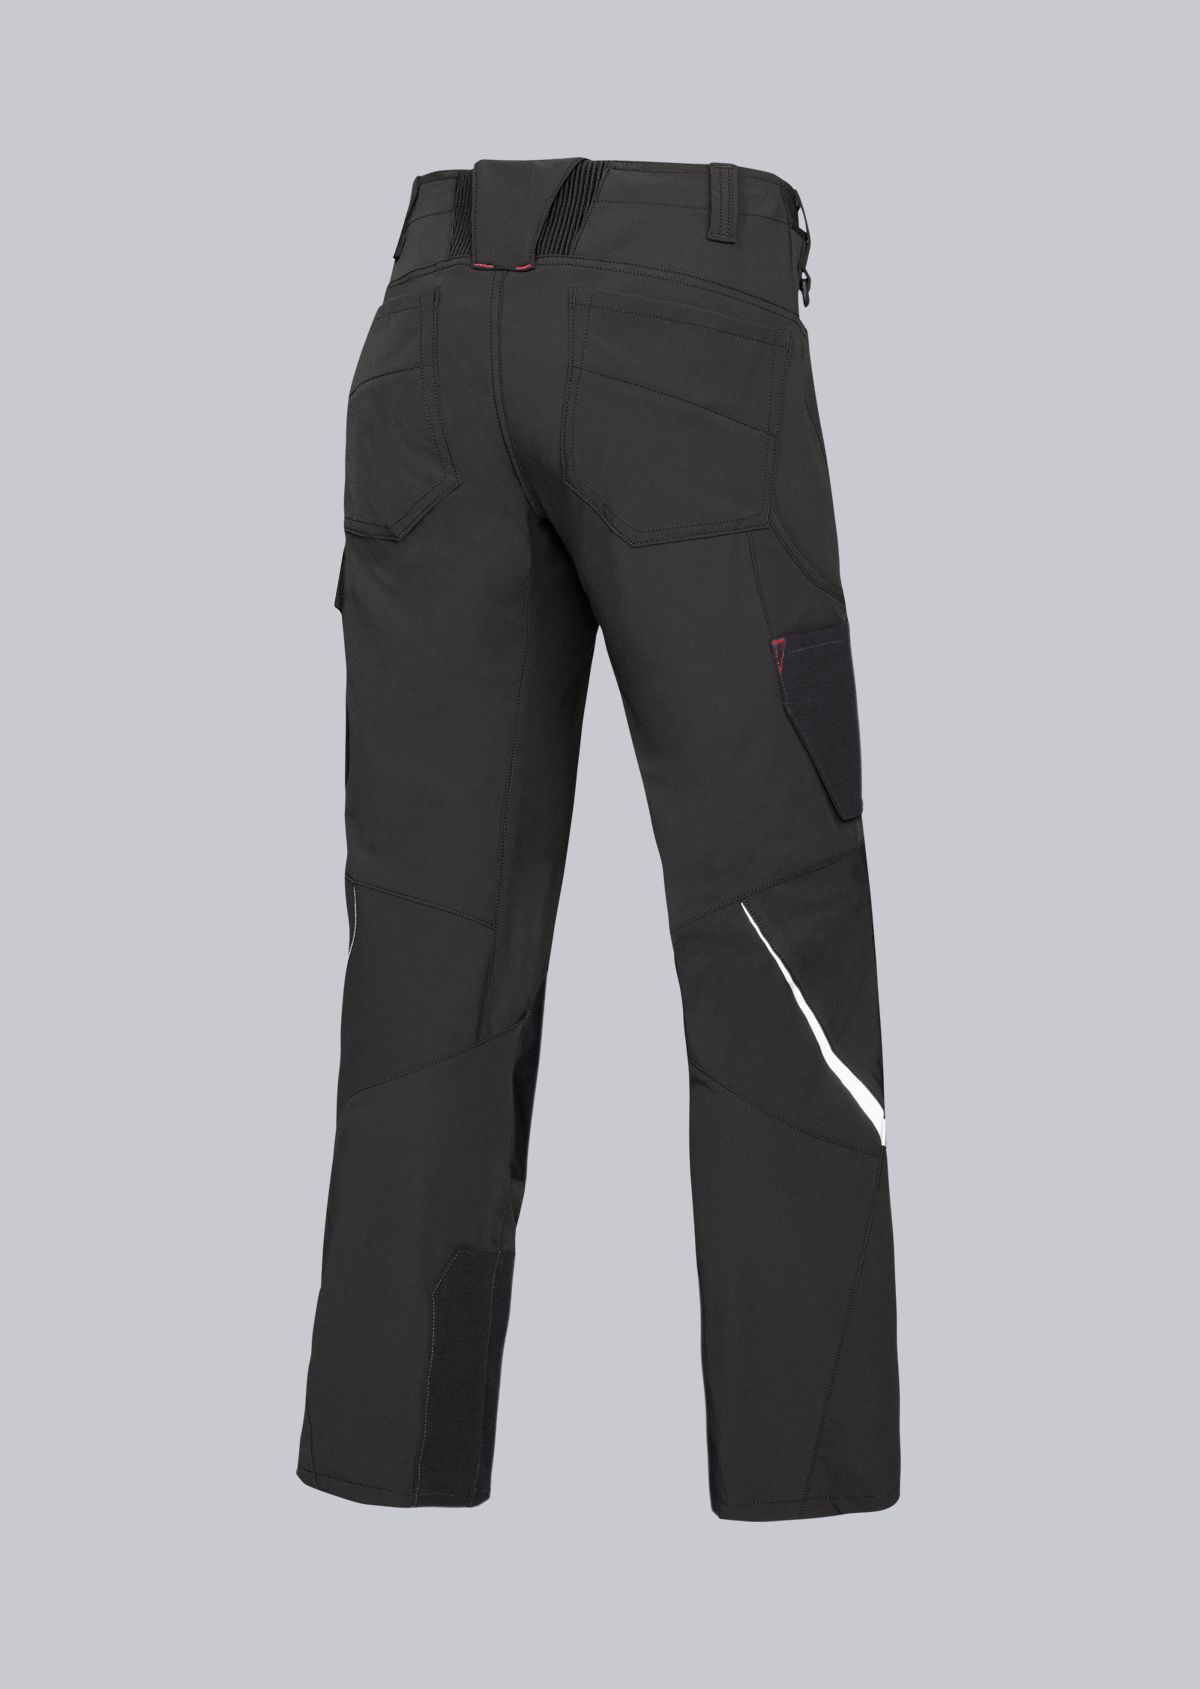 BP® Pantalon super stretch hommes